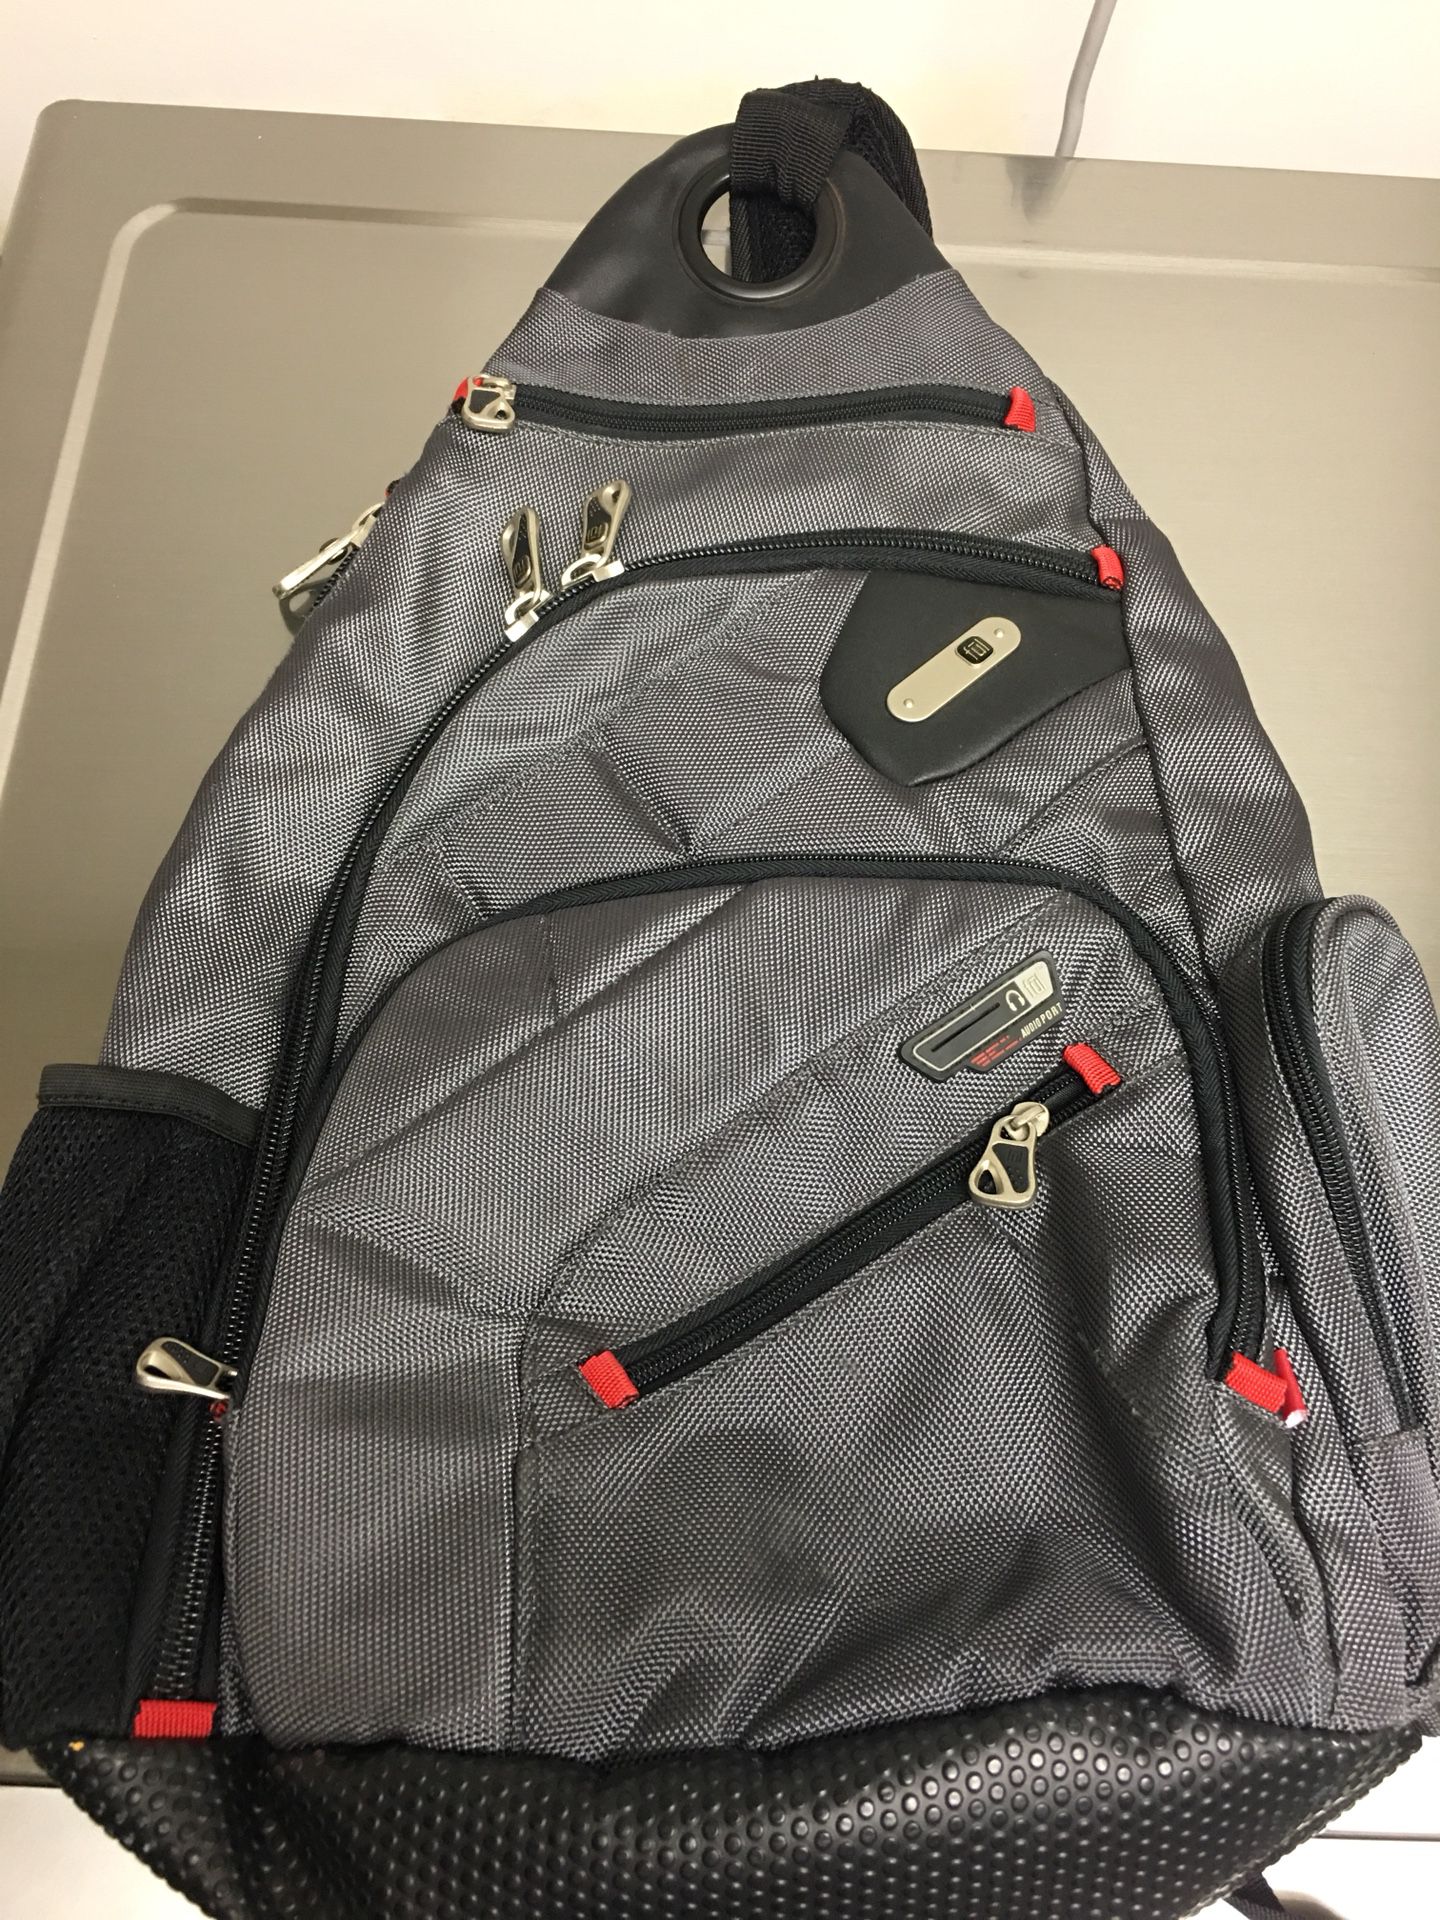 Ful laptop backpack